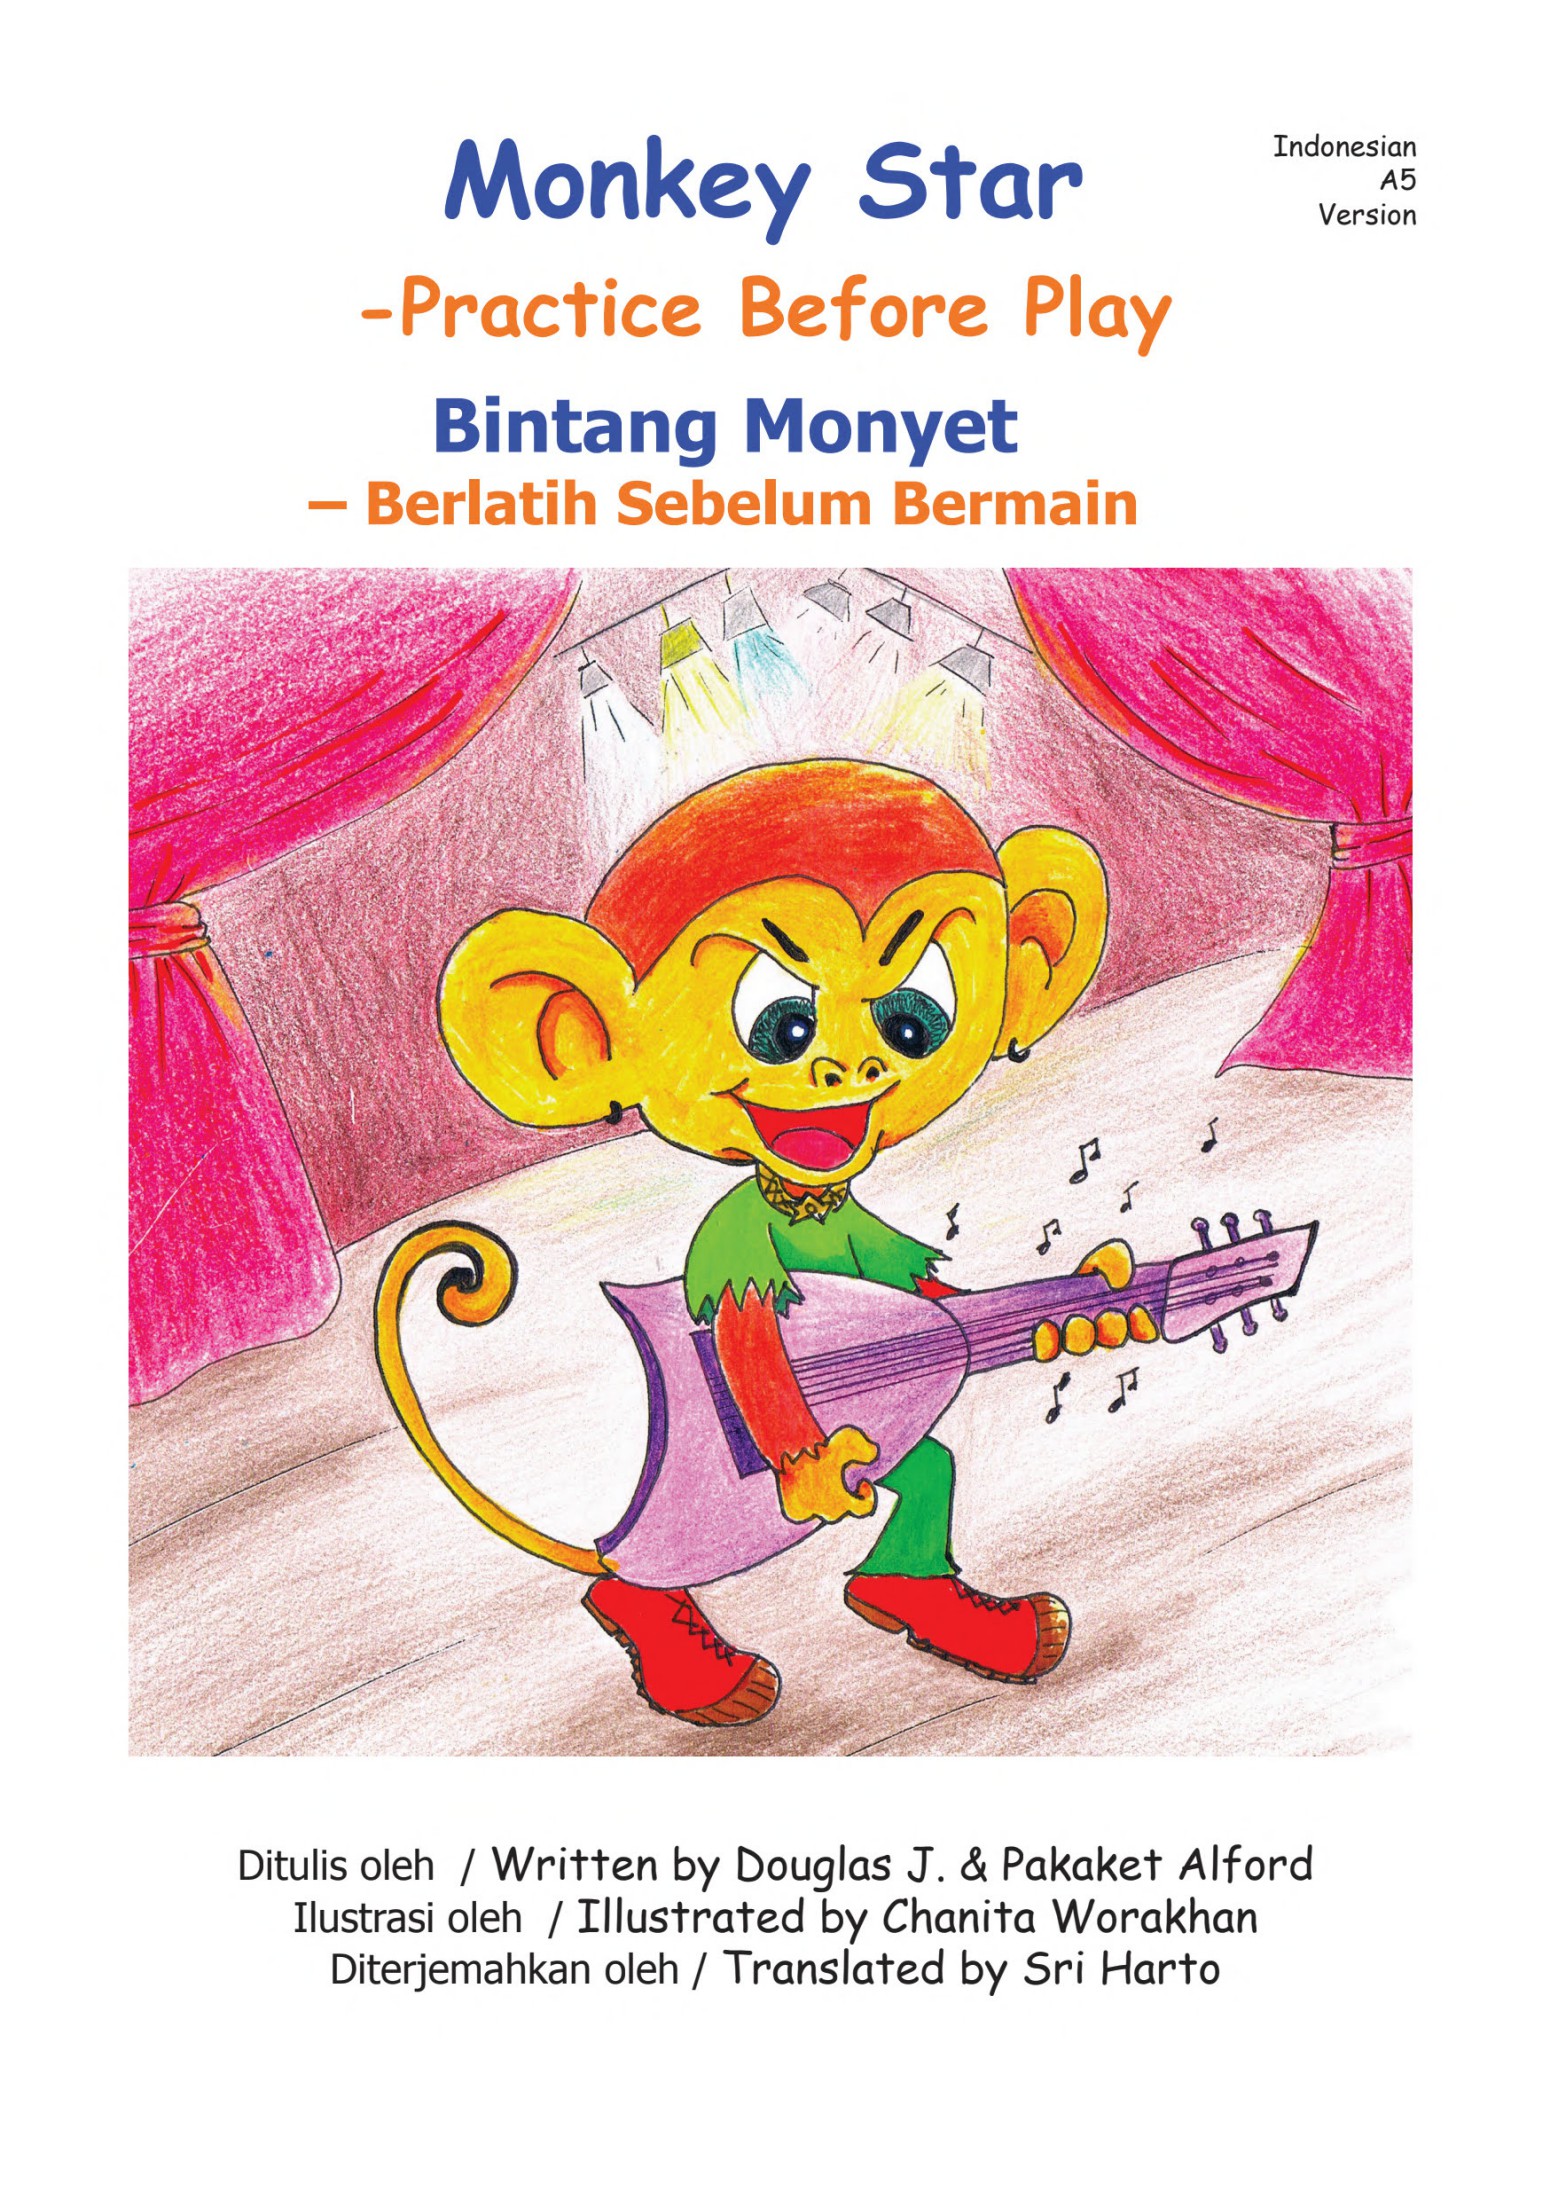 Monkey Star! Bintang Monyet Indonesian Version: -Practice Before Play – Berlatih Sebelum Bermain